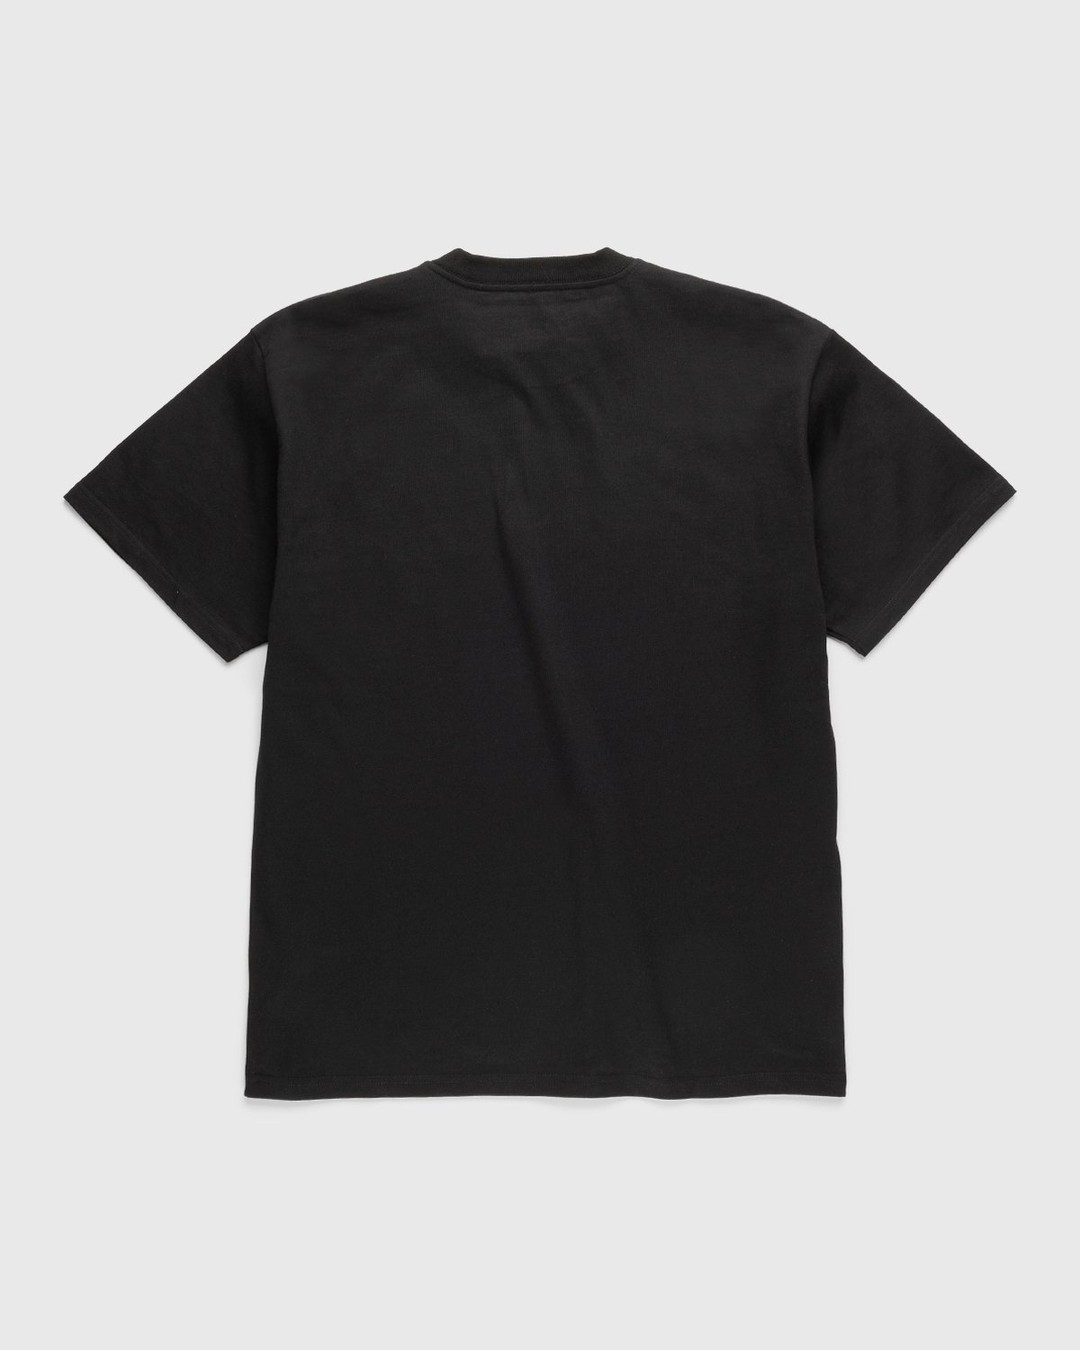 Carhartt WIP – 313 Smile T-Shirt Black - T-shirts - Black - Image 2